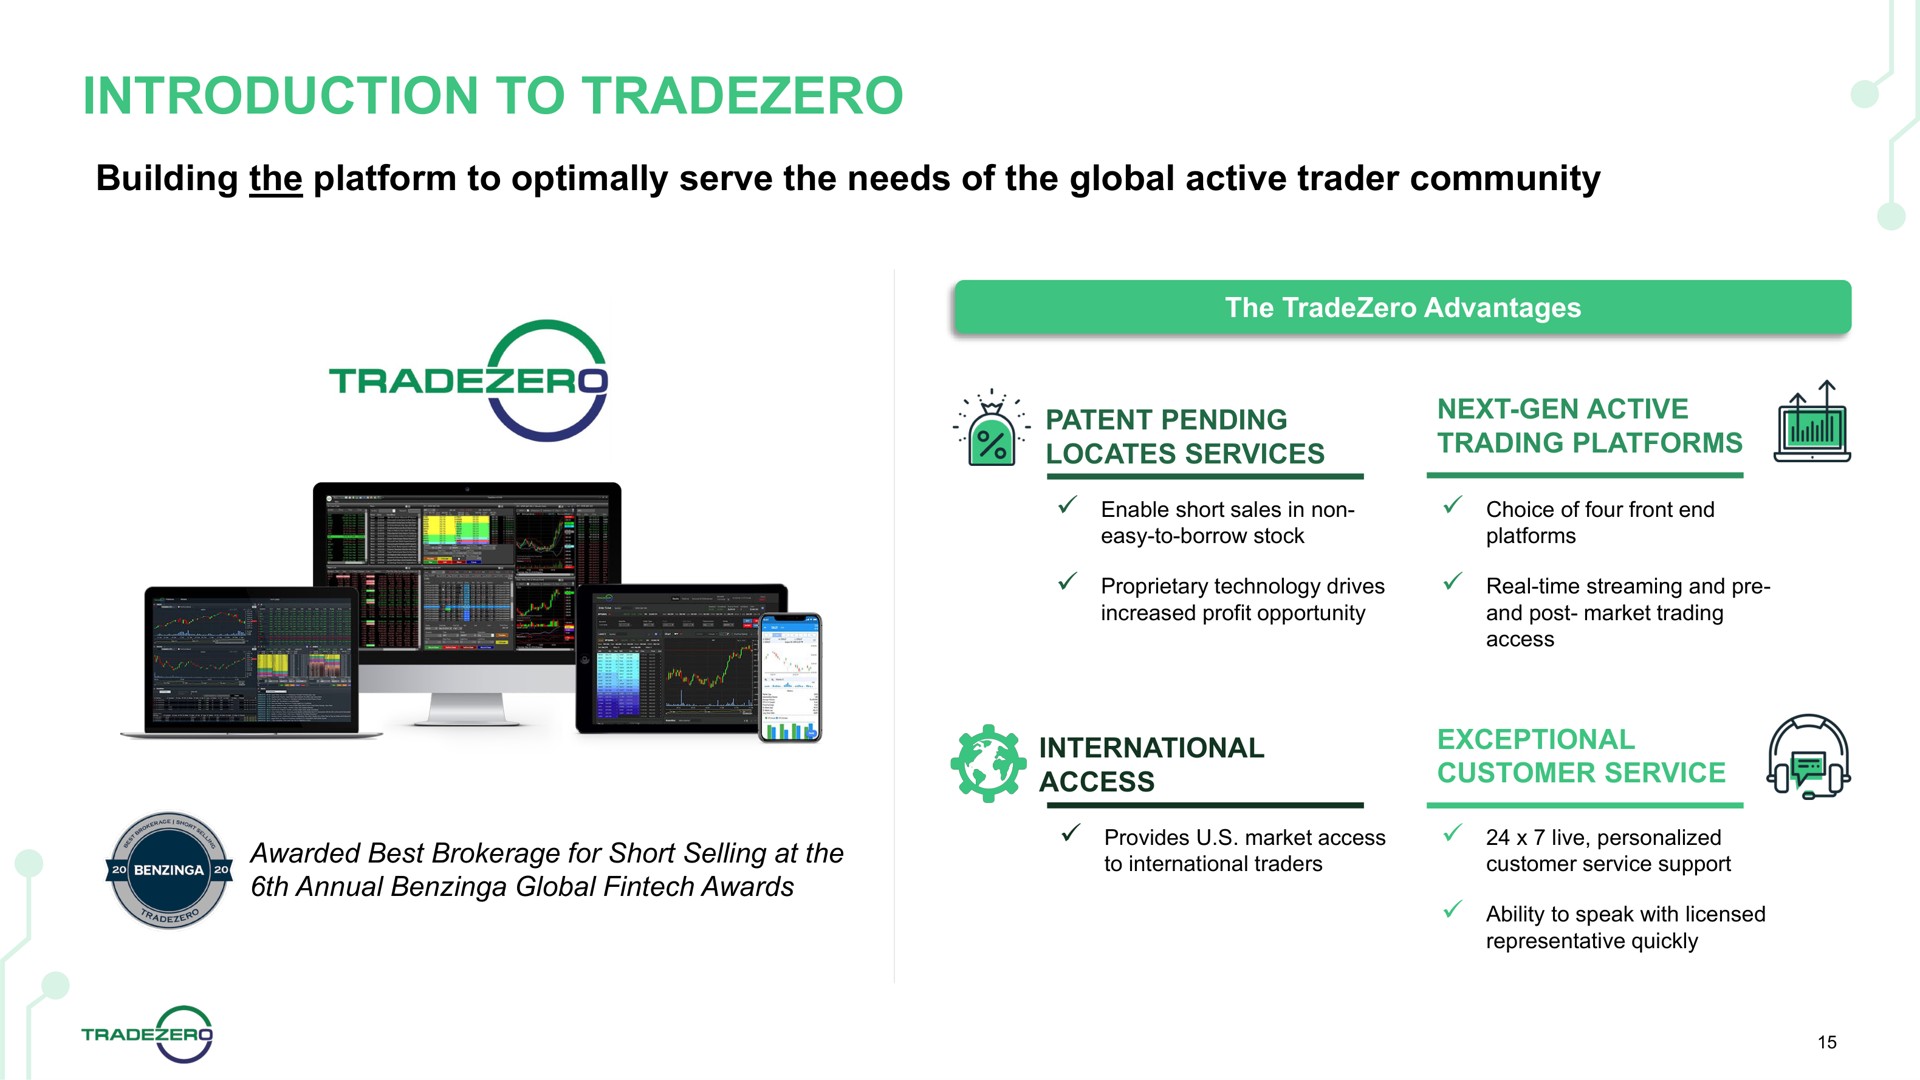 introduction to patent pending locates services | TradeZero